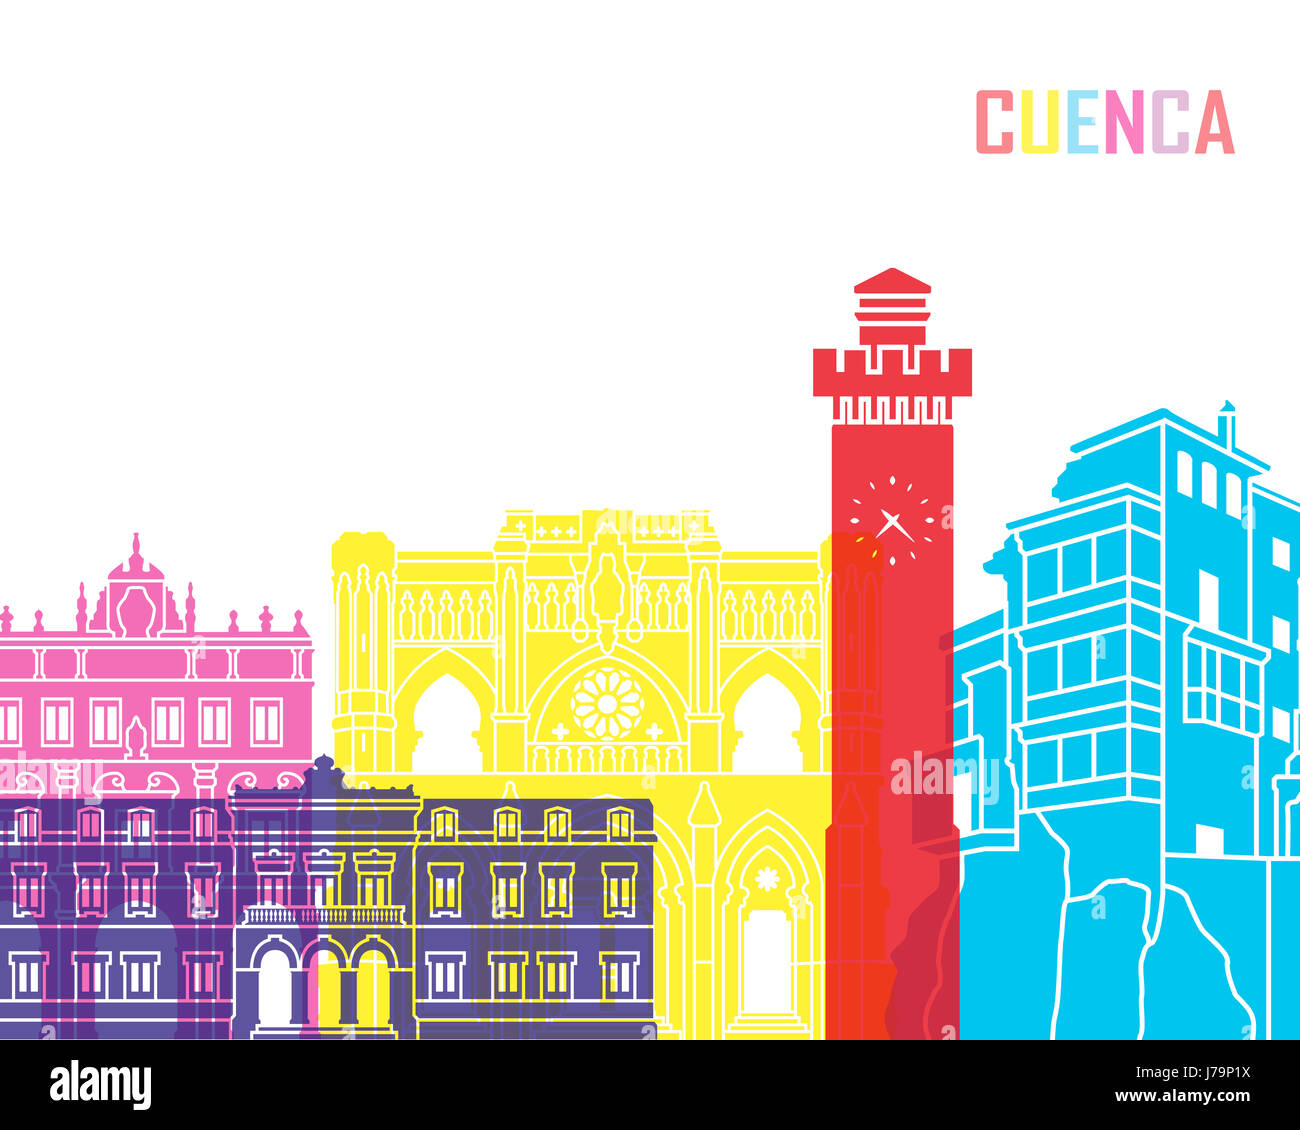 Cuenca skyline pop in editable vector file Stock Photo